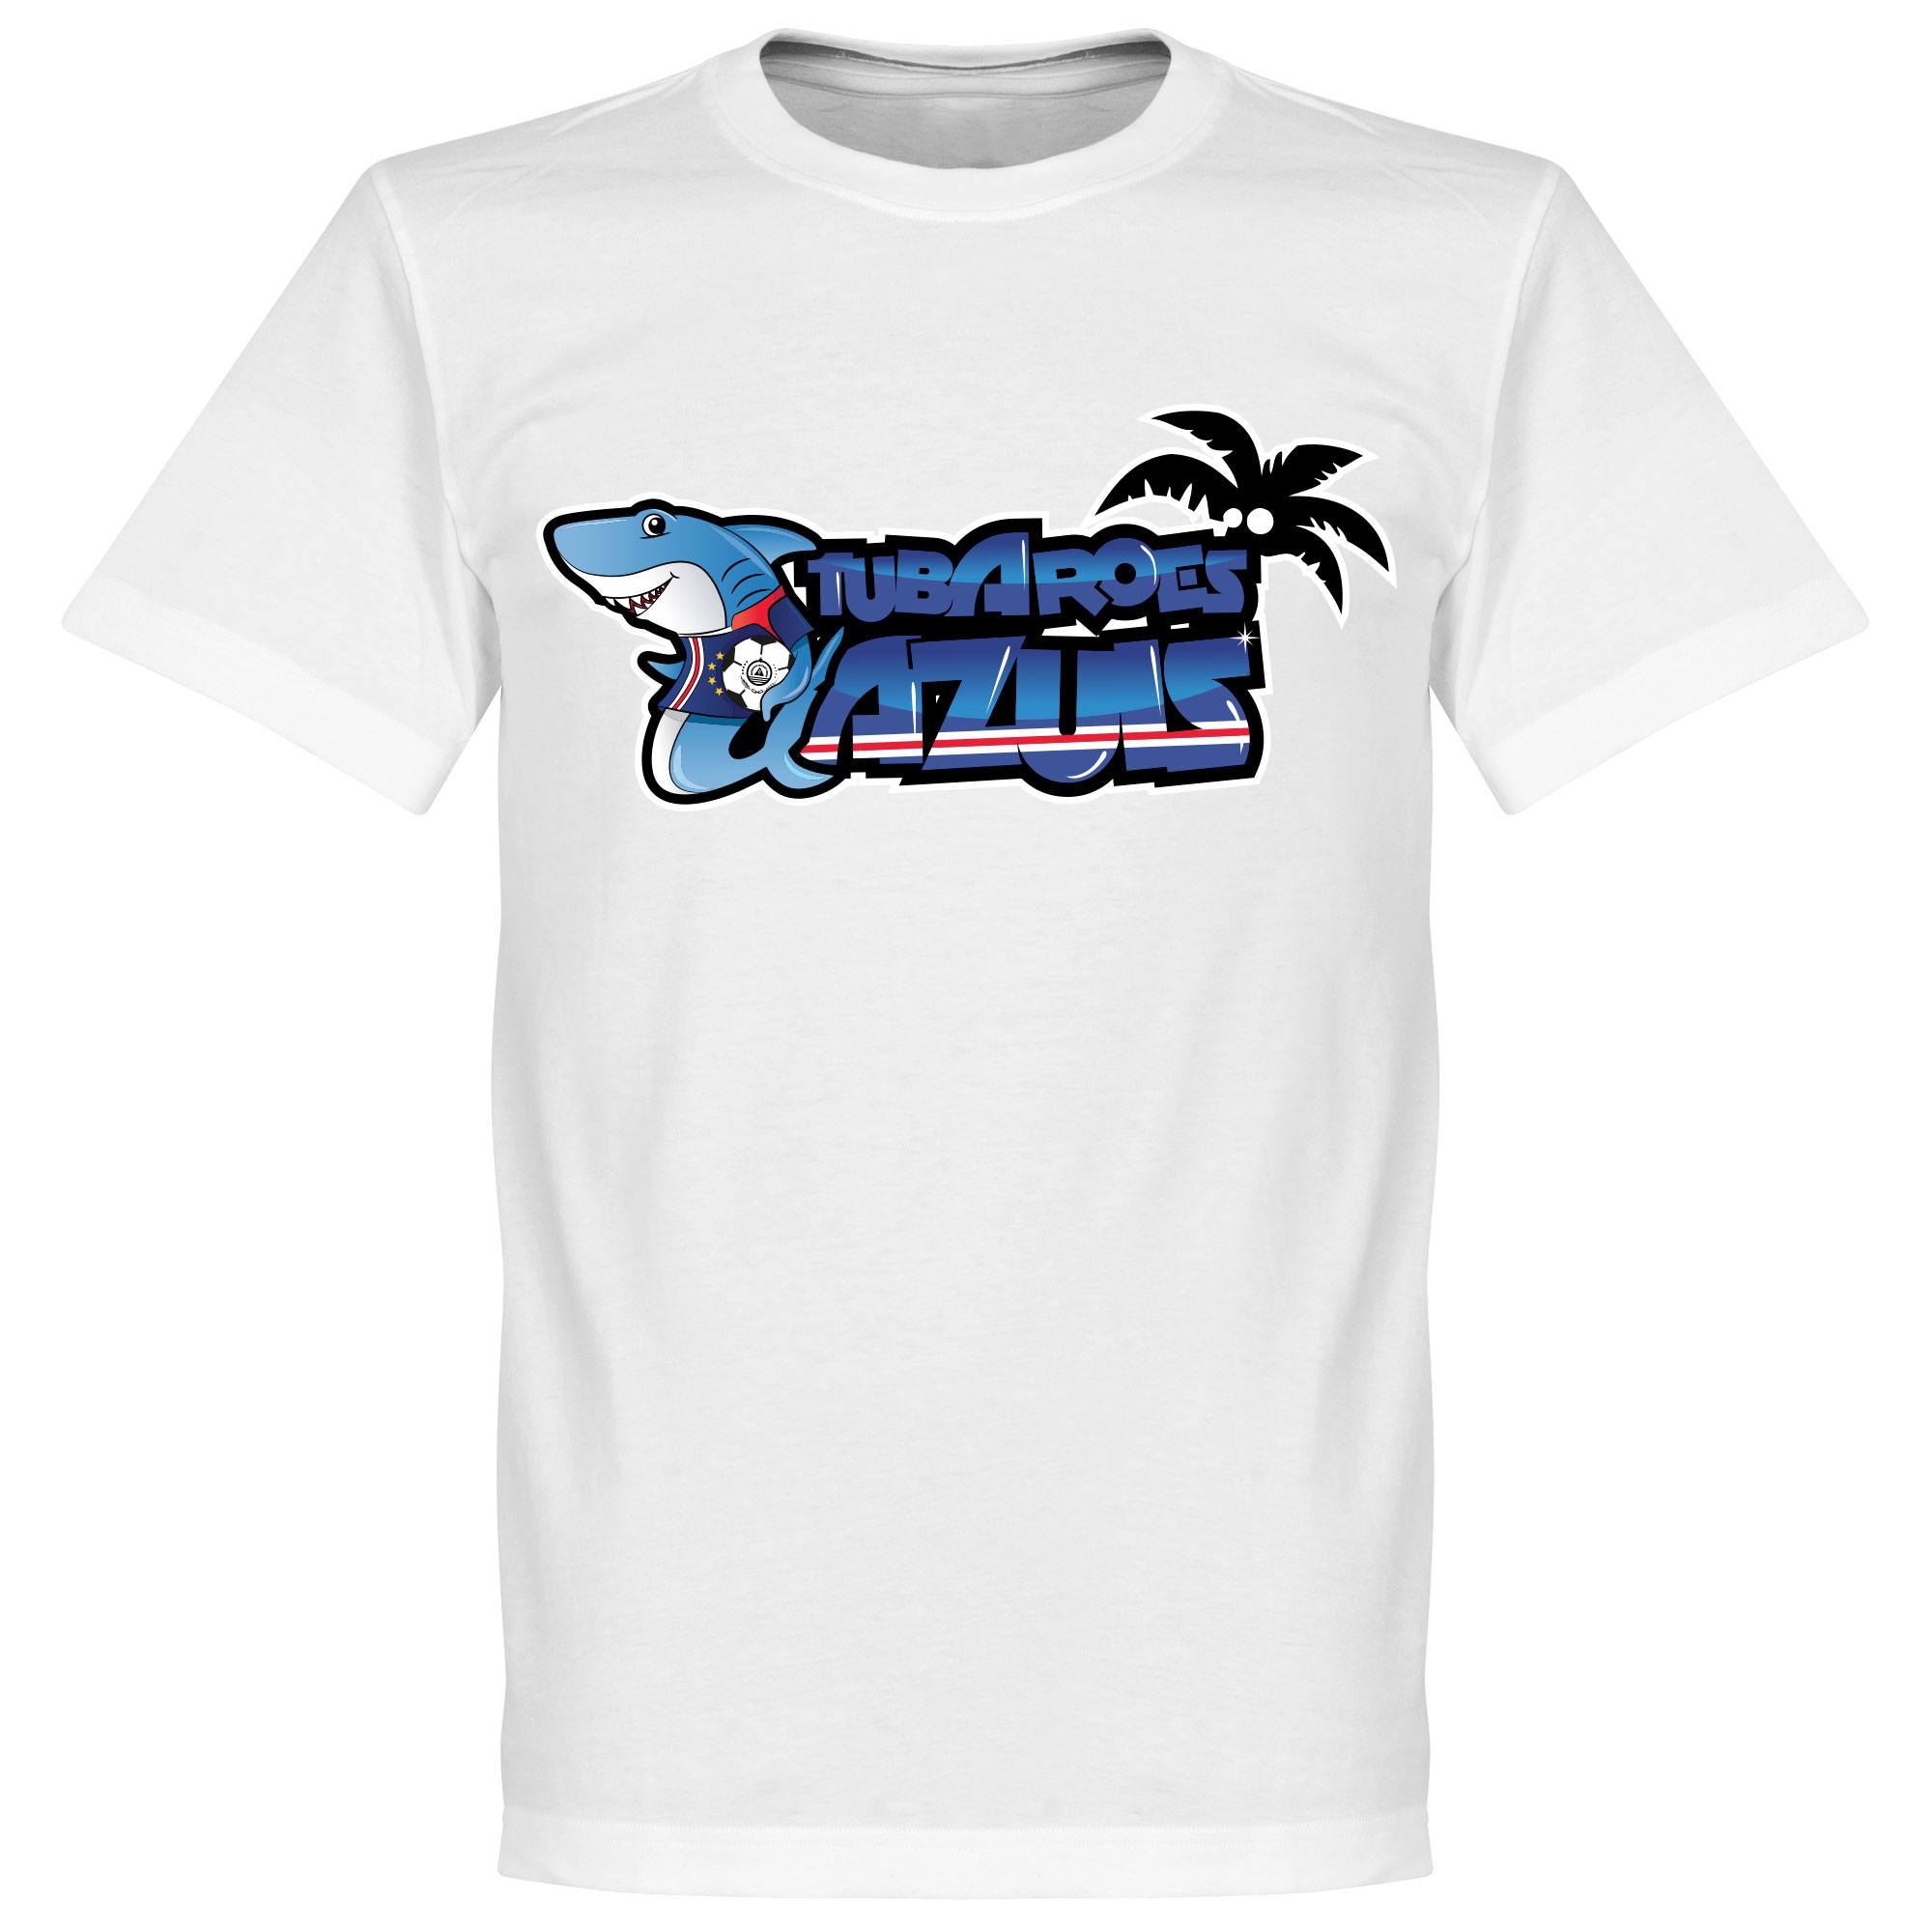 Kaapverdië Tubarões Azuis T-shirt S